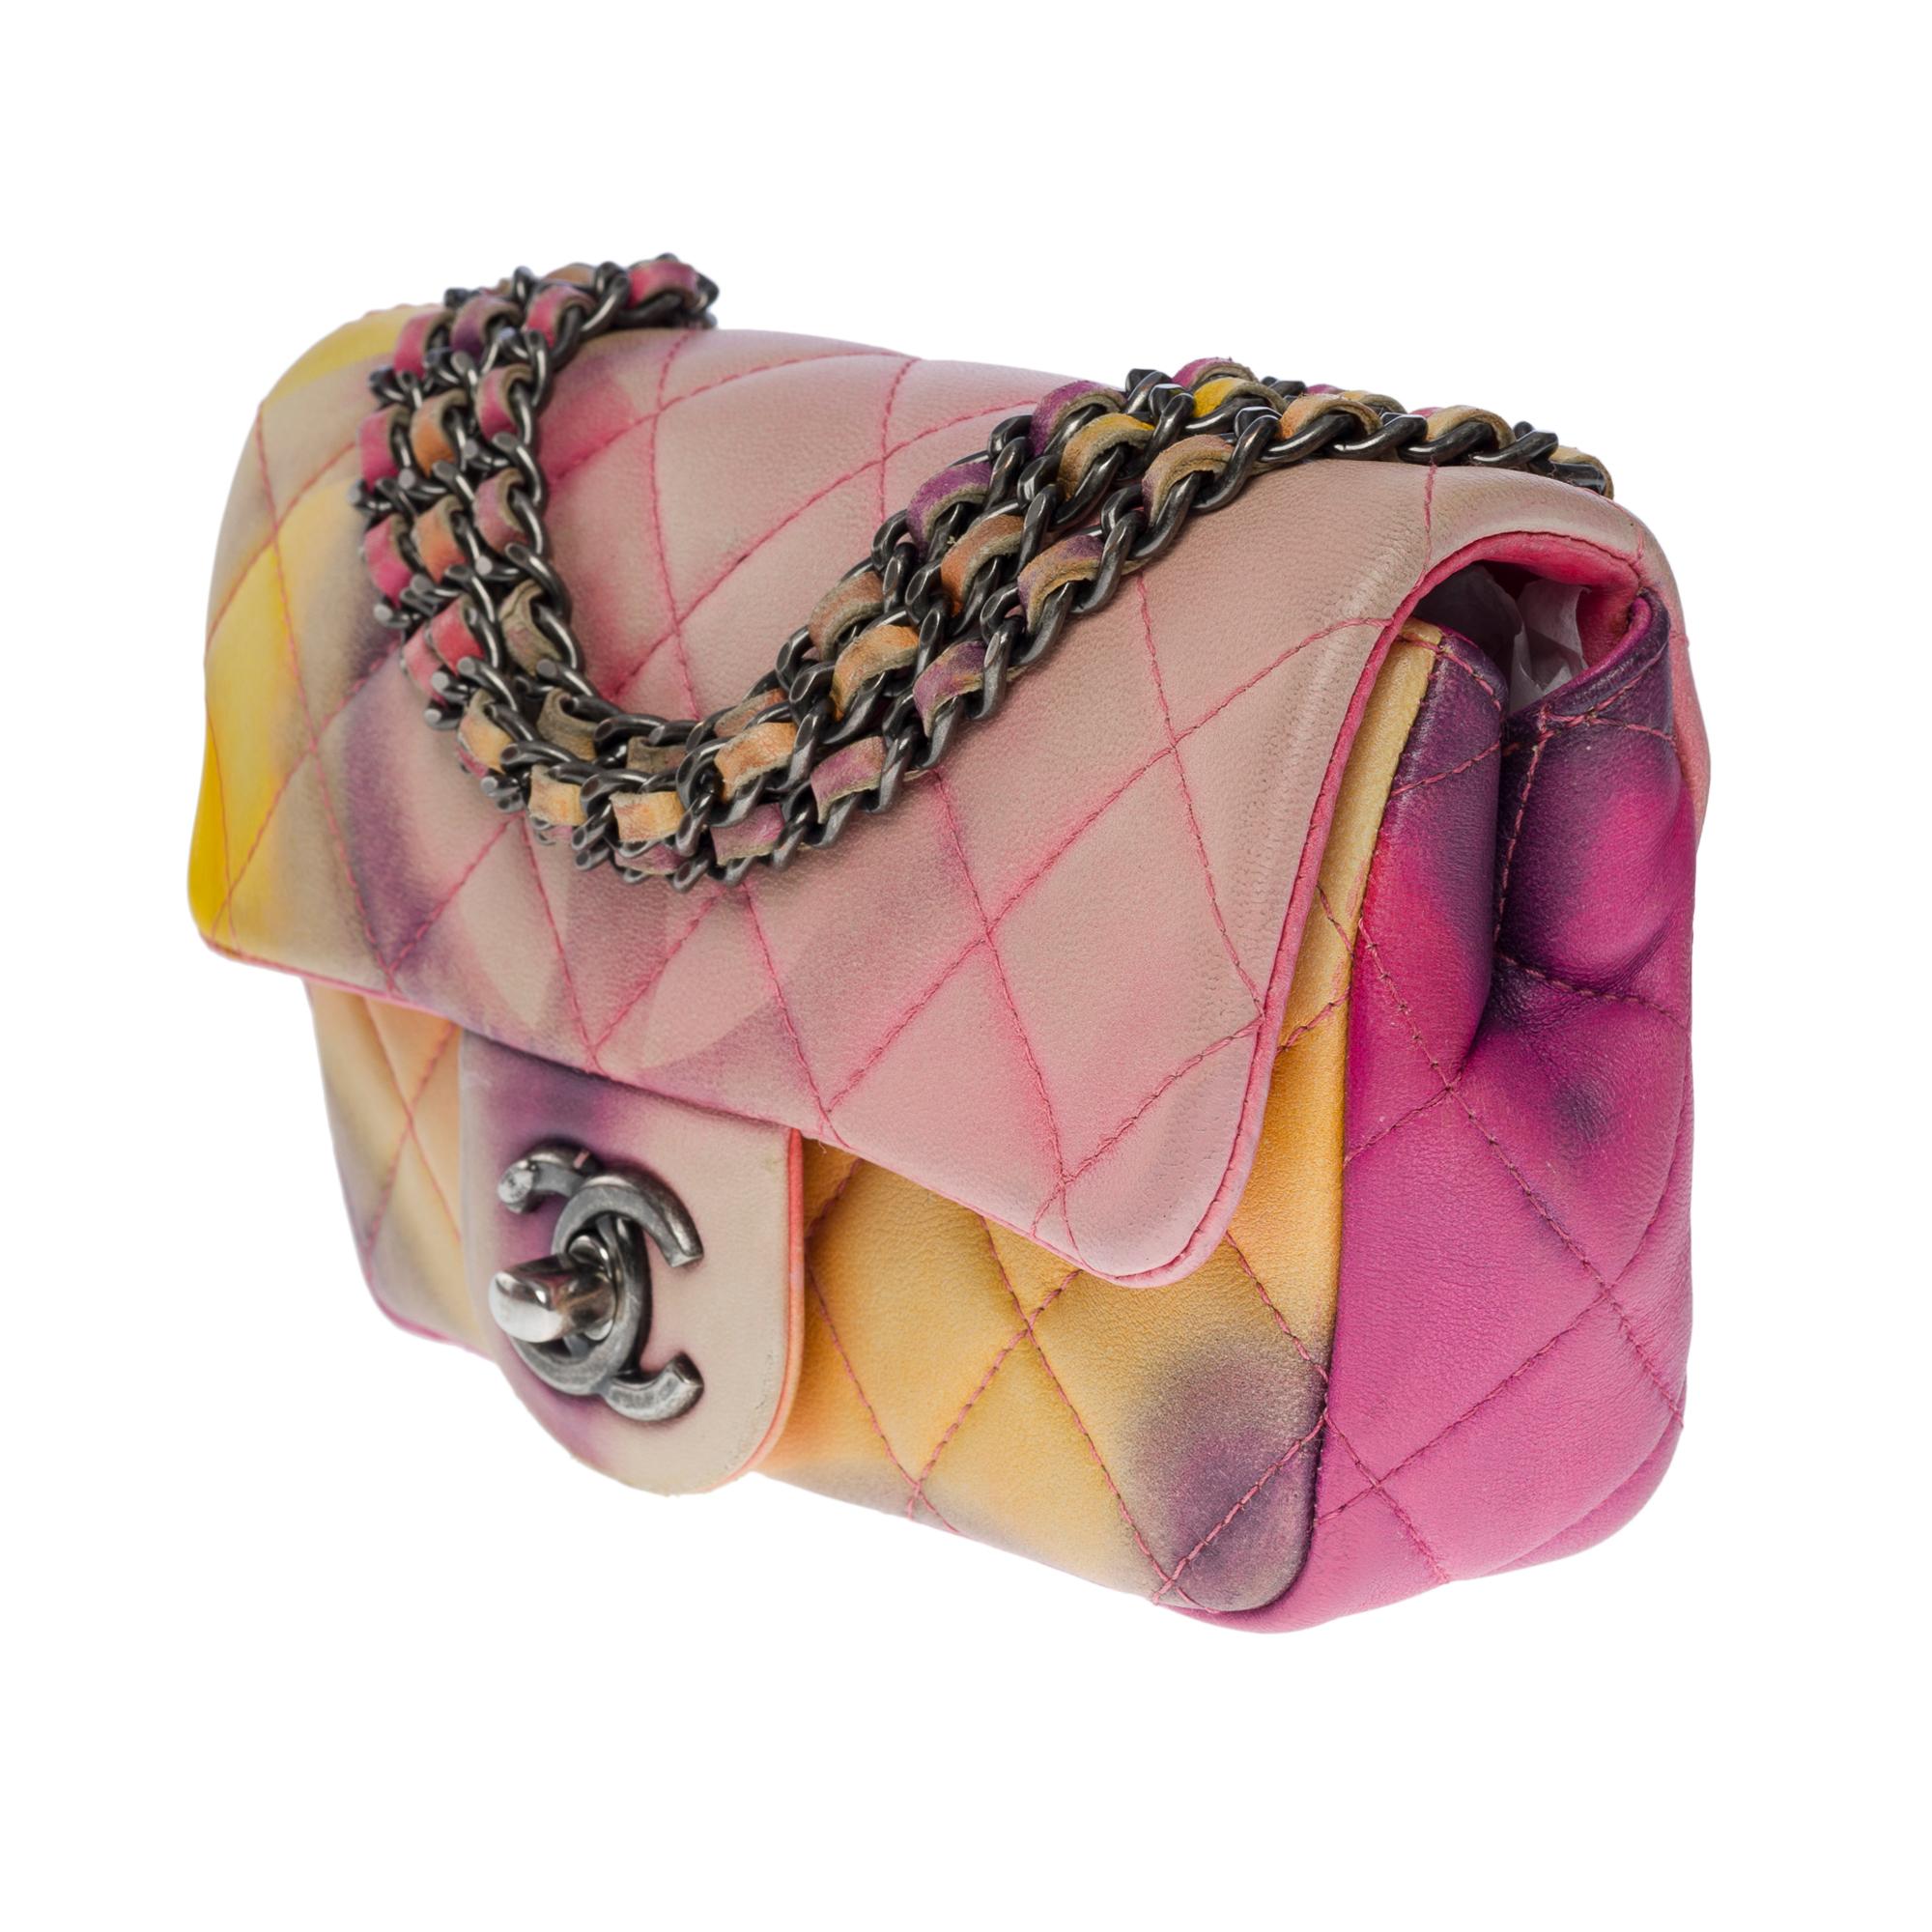 Women's Rare Power Flower Chanel Timeless Mini shoulder bag in multicolor leather, SHW For Sale